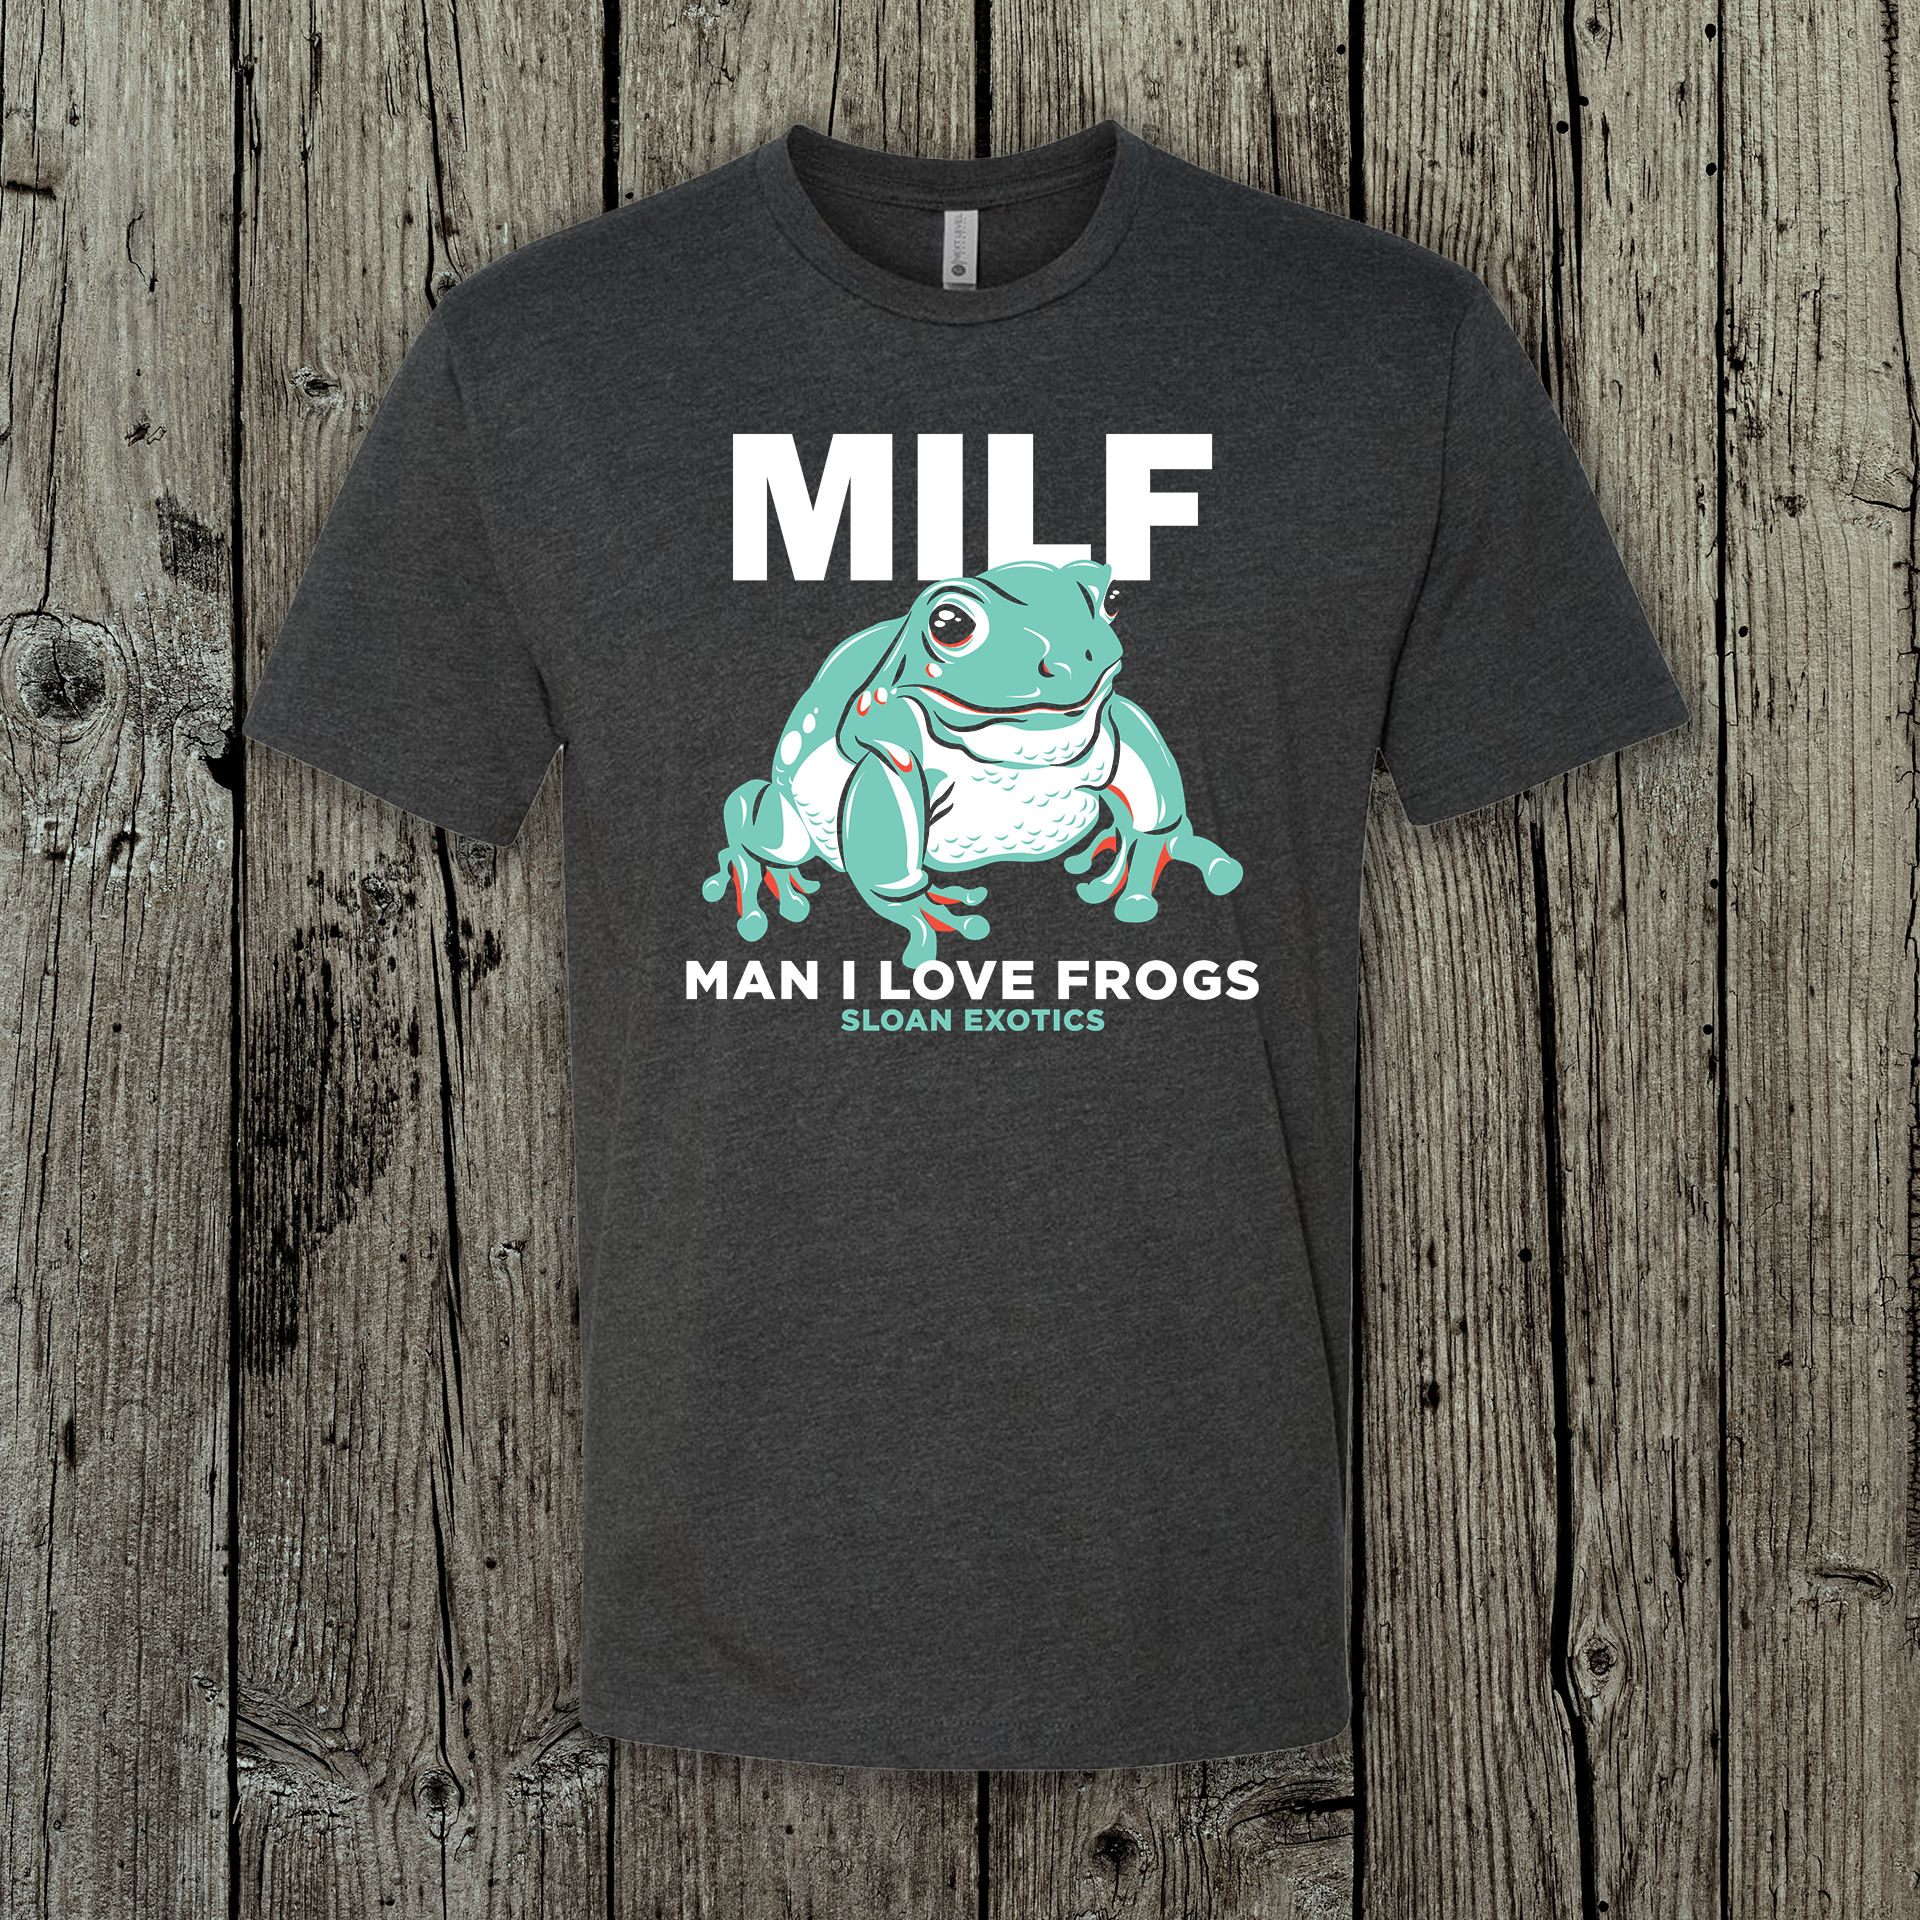 Milf Man I Love Frogs Shirt, Fashionable T-Shirt